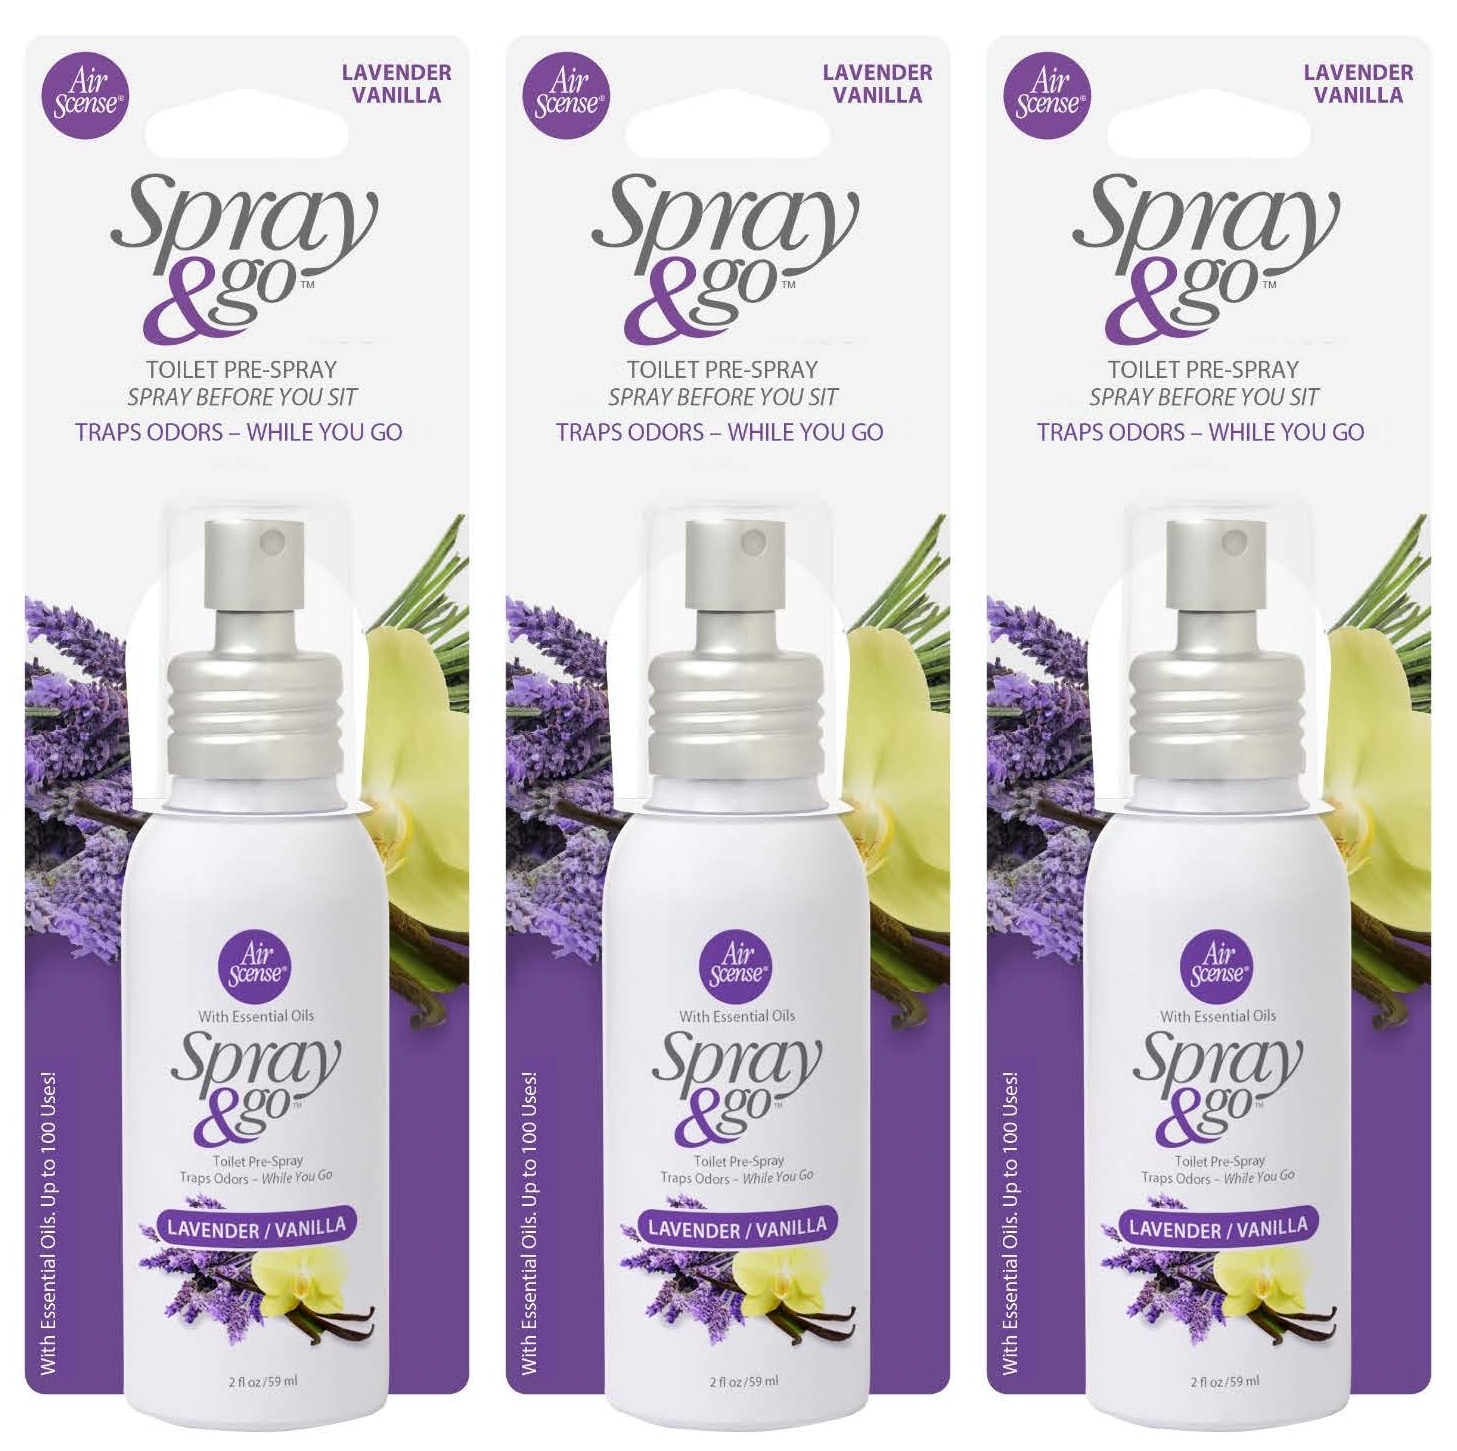 Glade Air Freshener, Room Spray, Lavender & Vanilla, 8 Oz, 12 Count